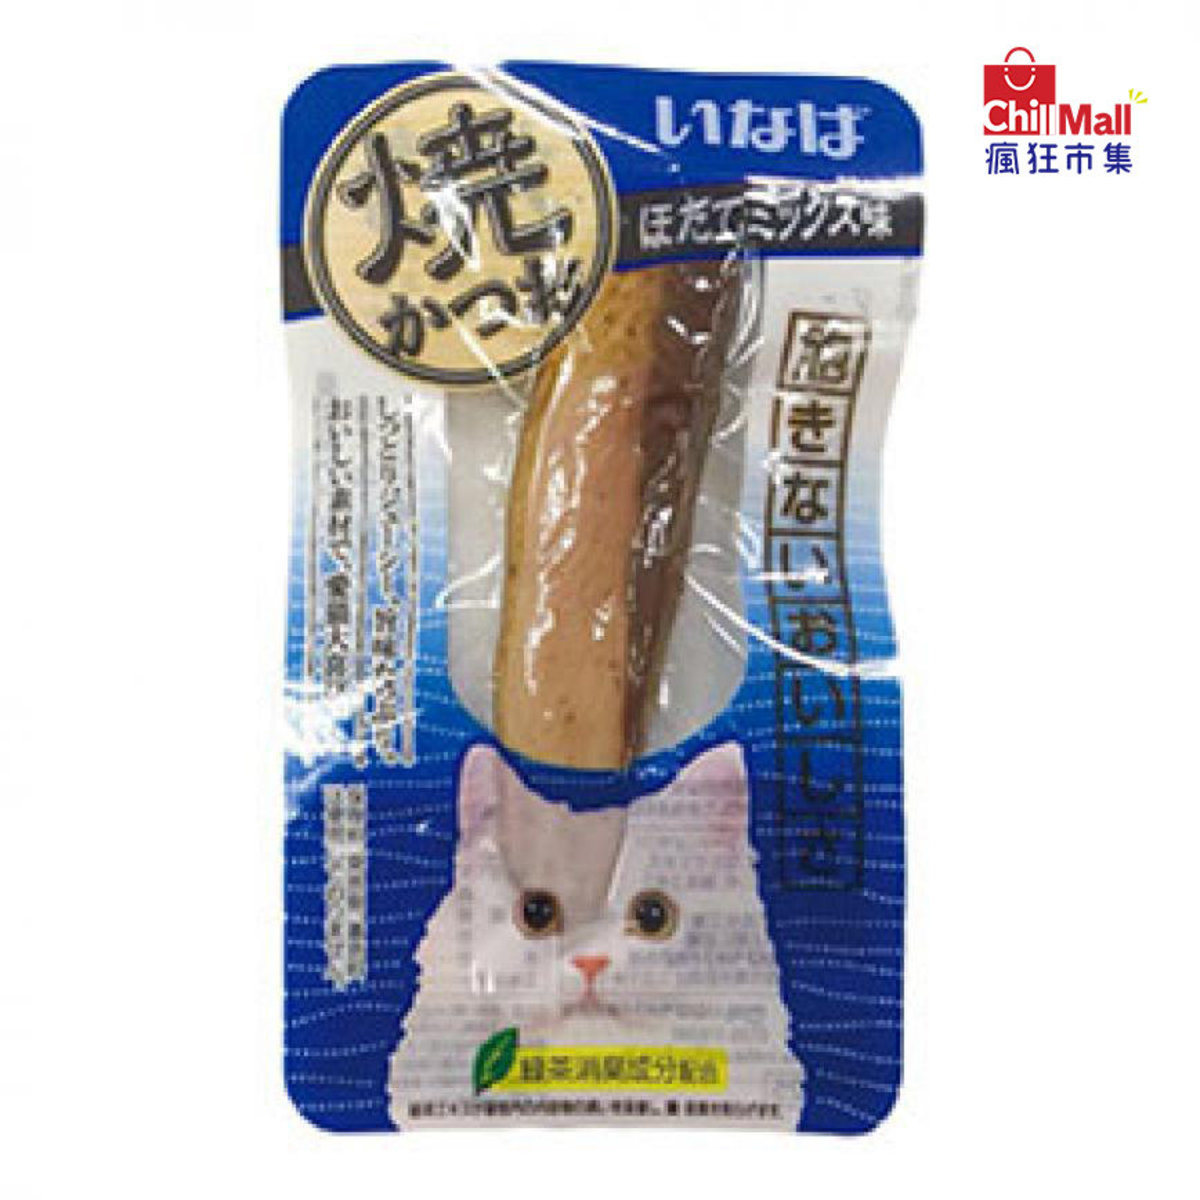 CIAO 貓零食 日本燒鰹魚條 ほたてミックス味 小包裝 15g [雜錦干貝味] (藍) (QSC-25) 3636356